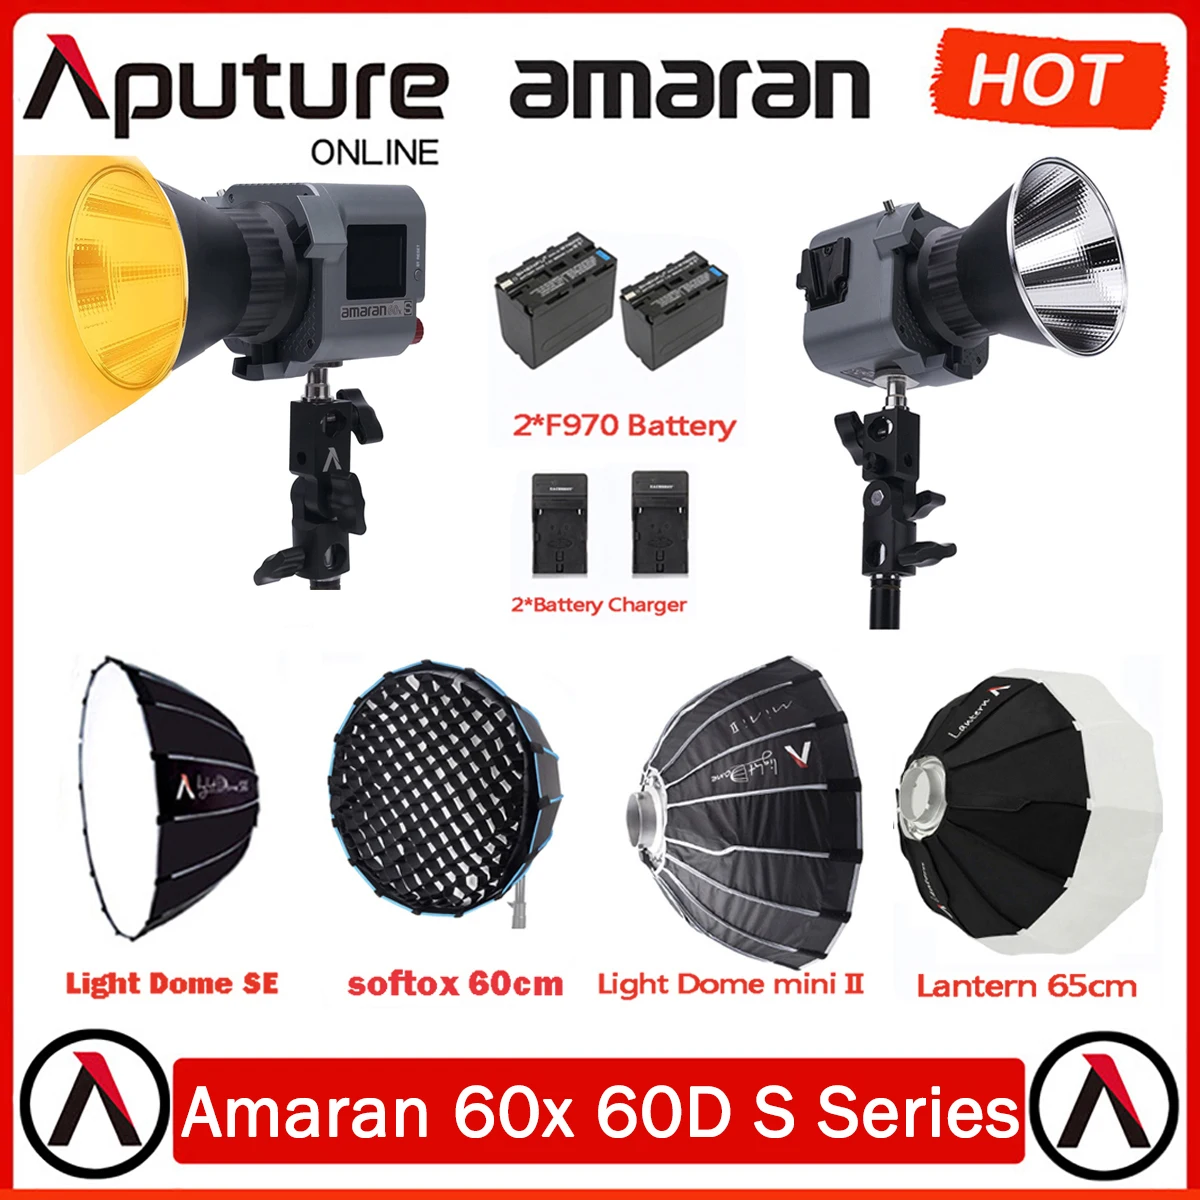 

Aputure Amaran Cob 60x 60D S series 2700K~6500K 60W Bicolor LED Video Light For Camera Lighting Video Photography Studio Upgrade